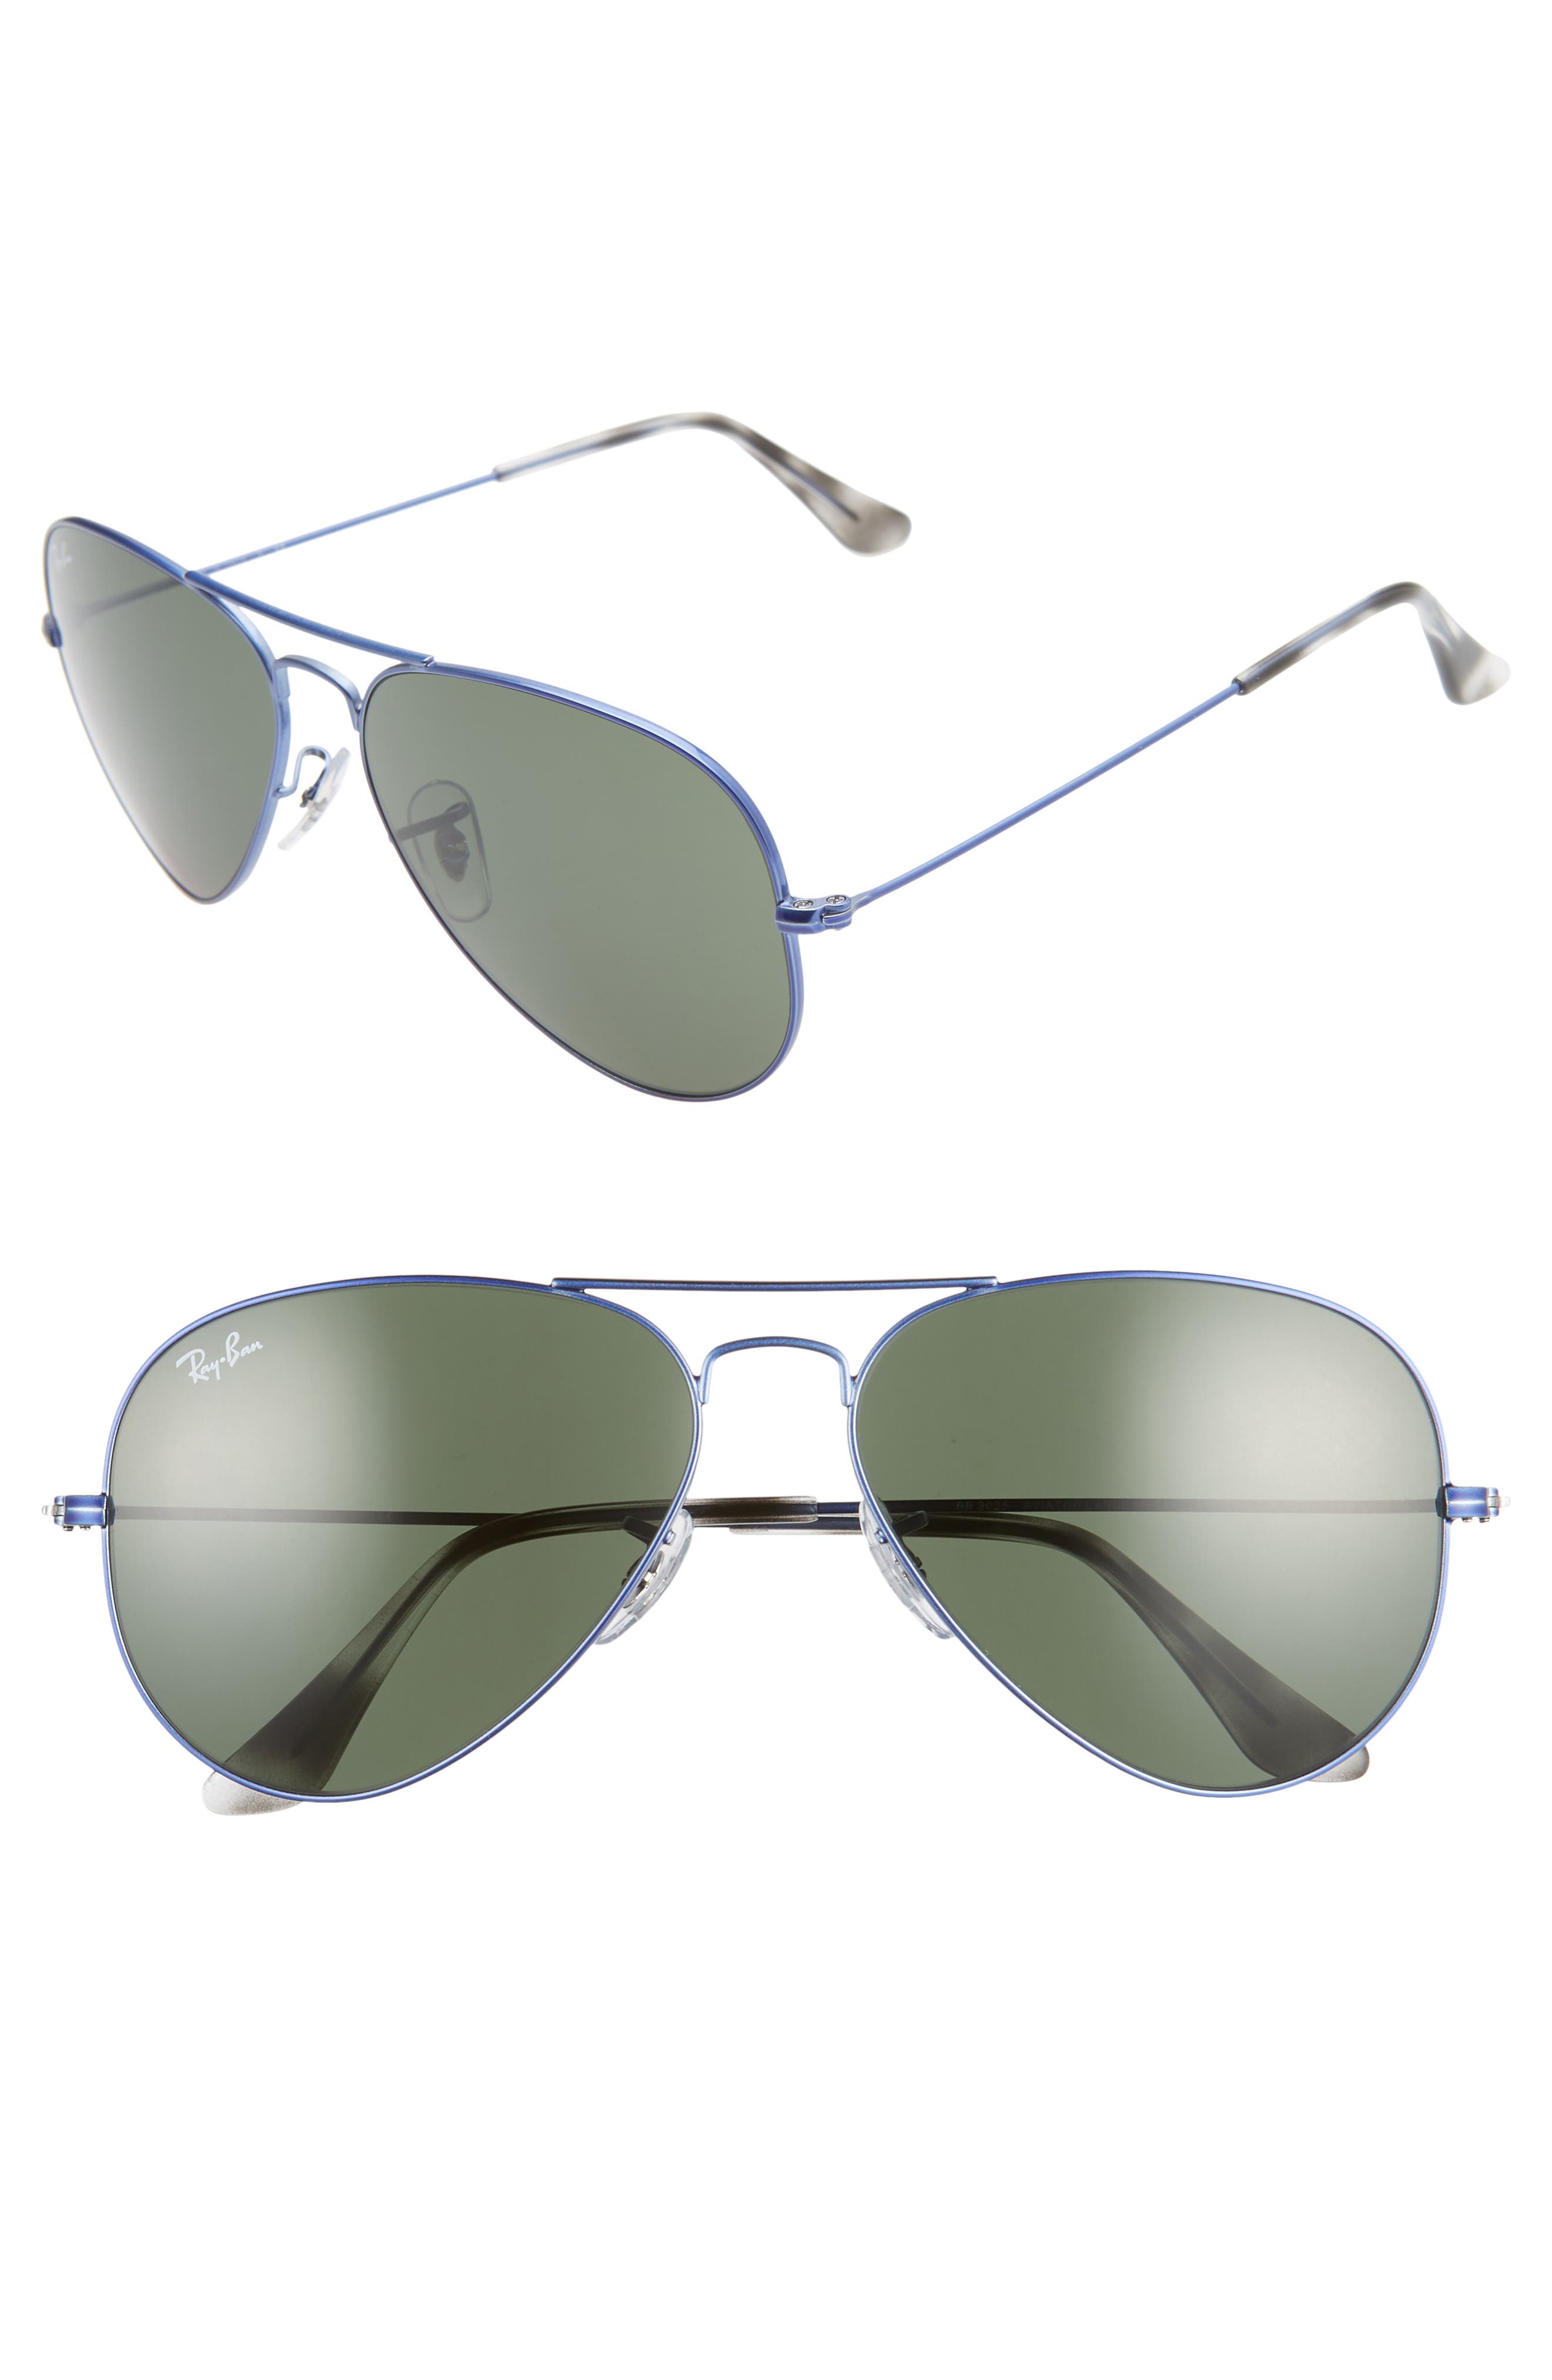 ray ban men's sunglasses nordstrom rack